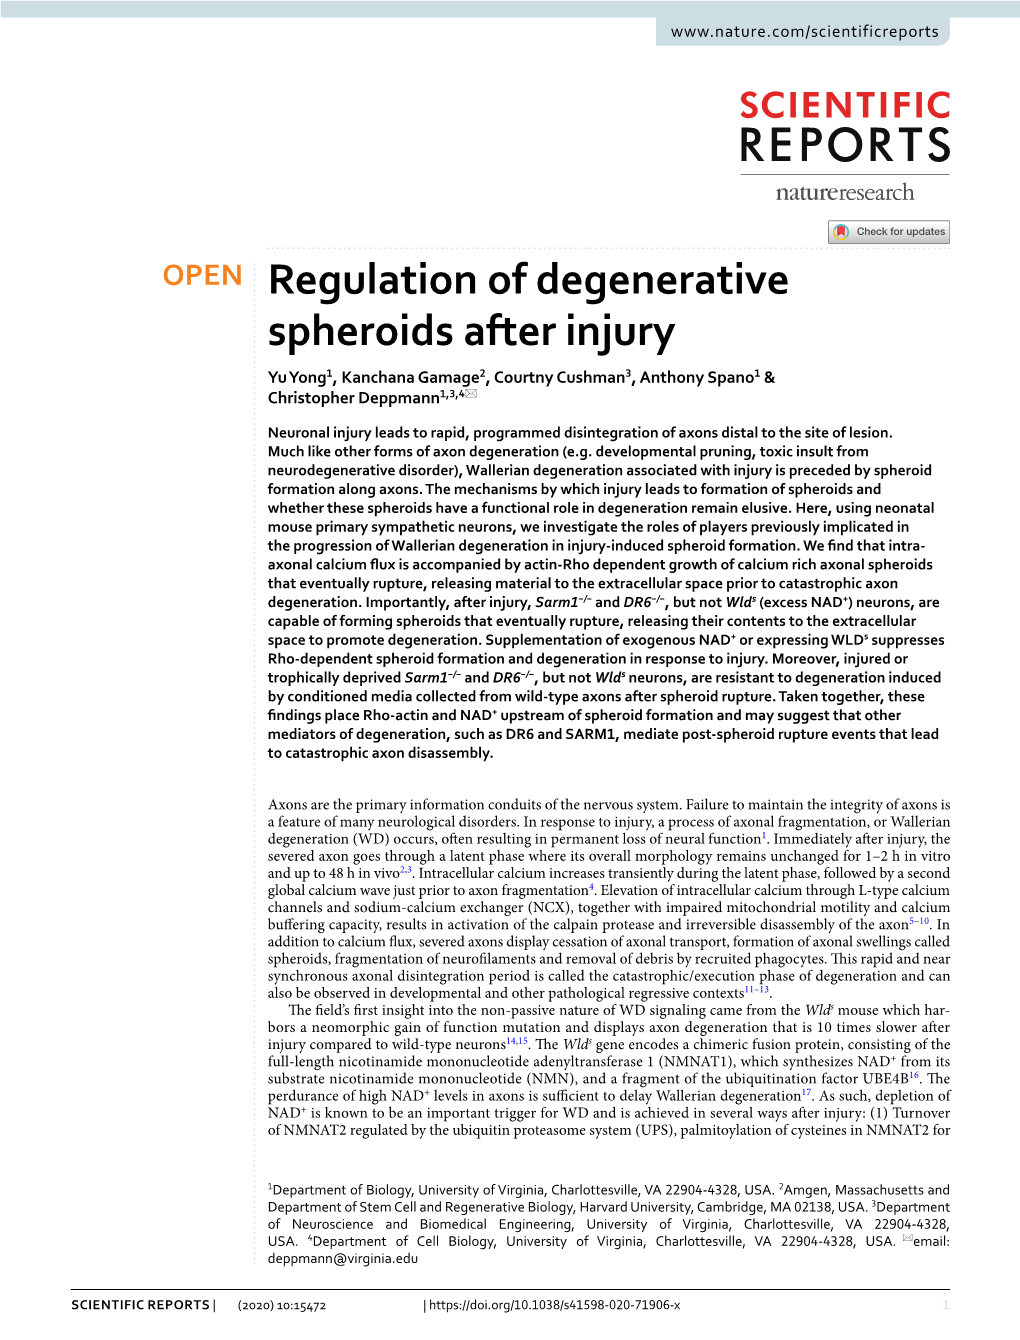 Regulation of Degenerative Spheroids After Injury Yu Yong1, Kanchana Gamage2, Courtny Cushman3, Anthony Spano1 & Christopher Deppmann1,3,4*